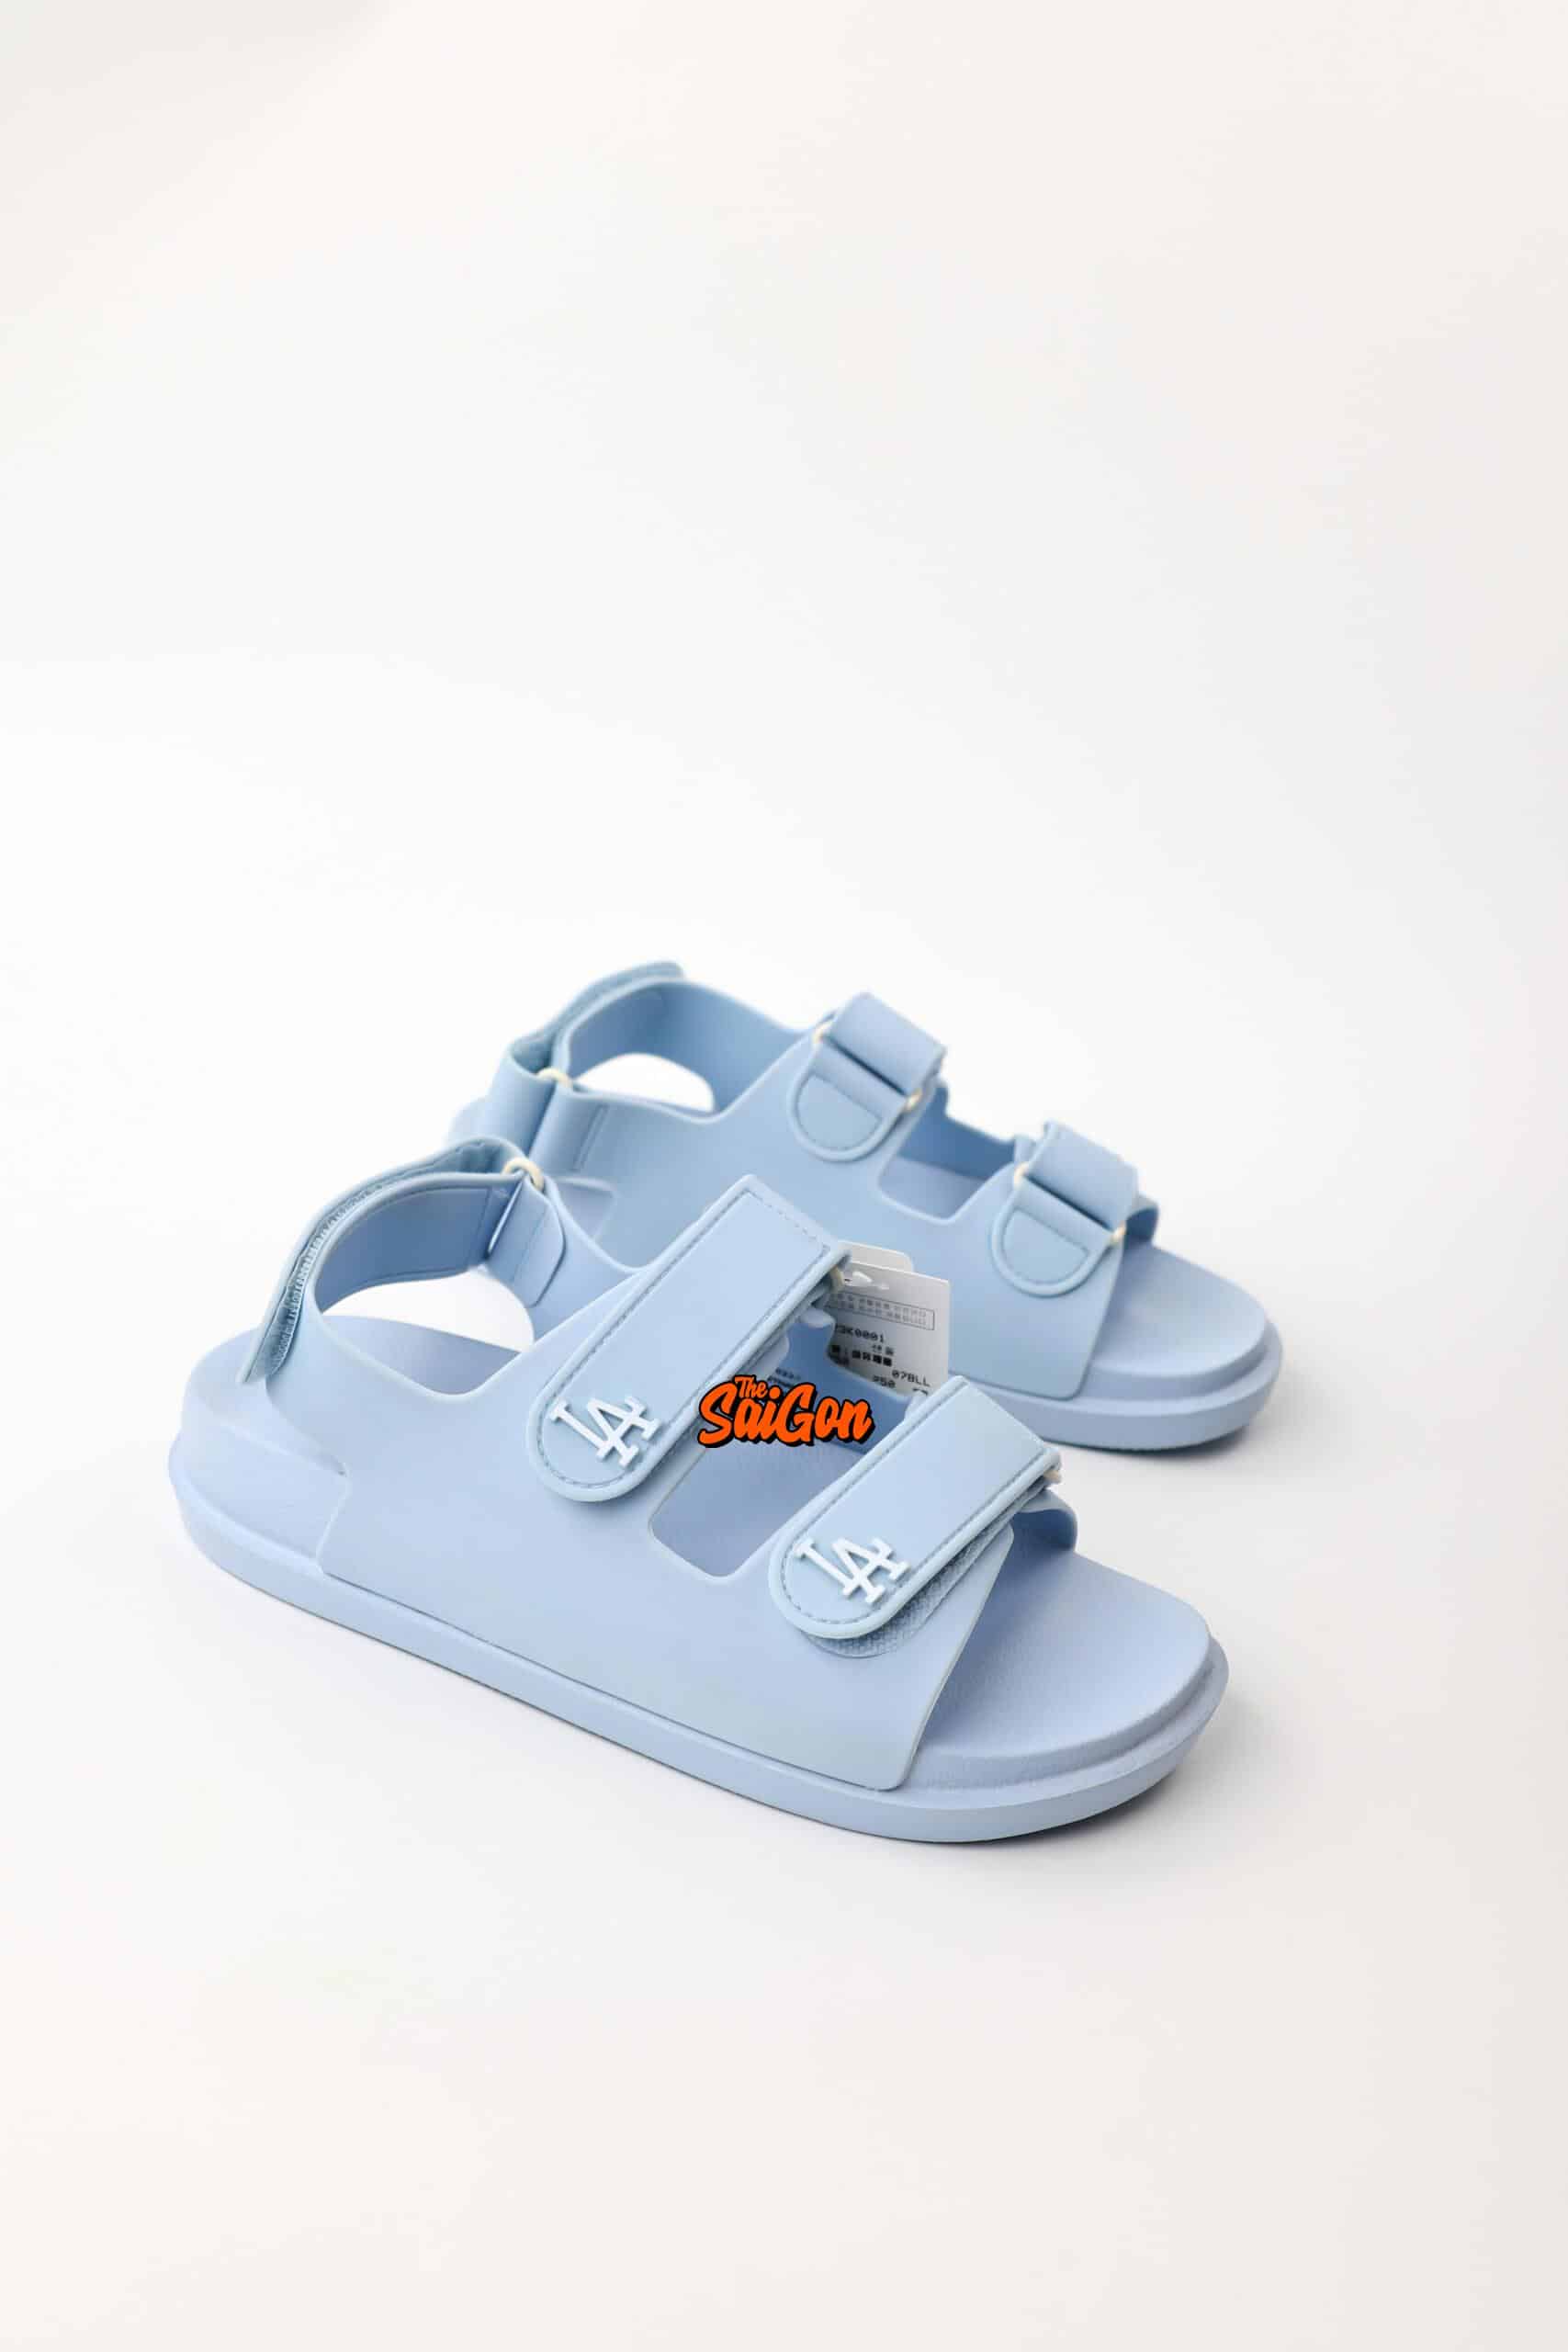 Baby Fanatic 2 Piece Bid And Shoes  Mlb Toronto Blue Jays  White Unisex  Infant Apparel  Target